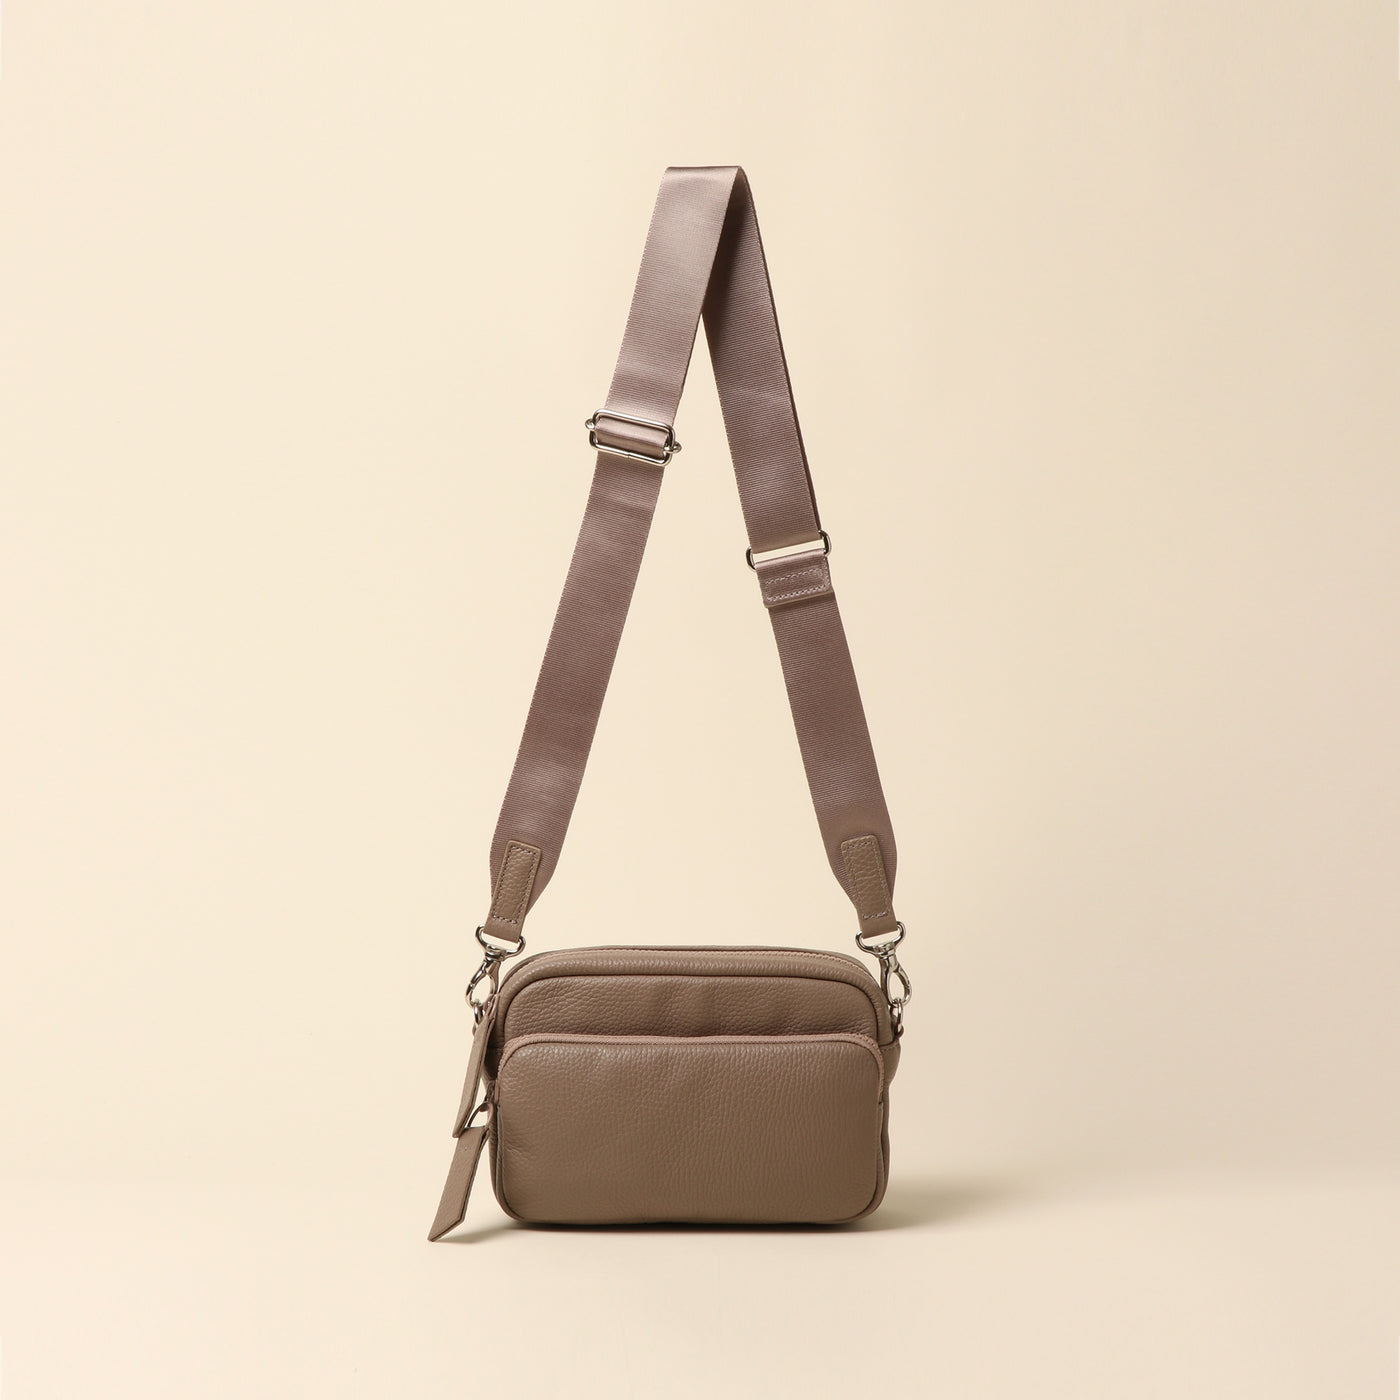 <itten-itten> Leather mini shoulder bag / terracotta